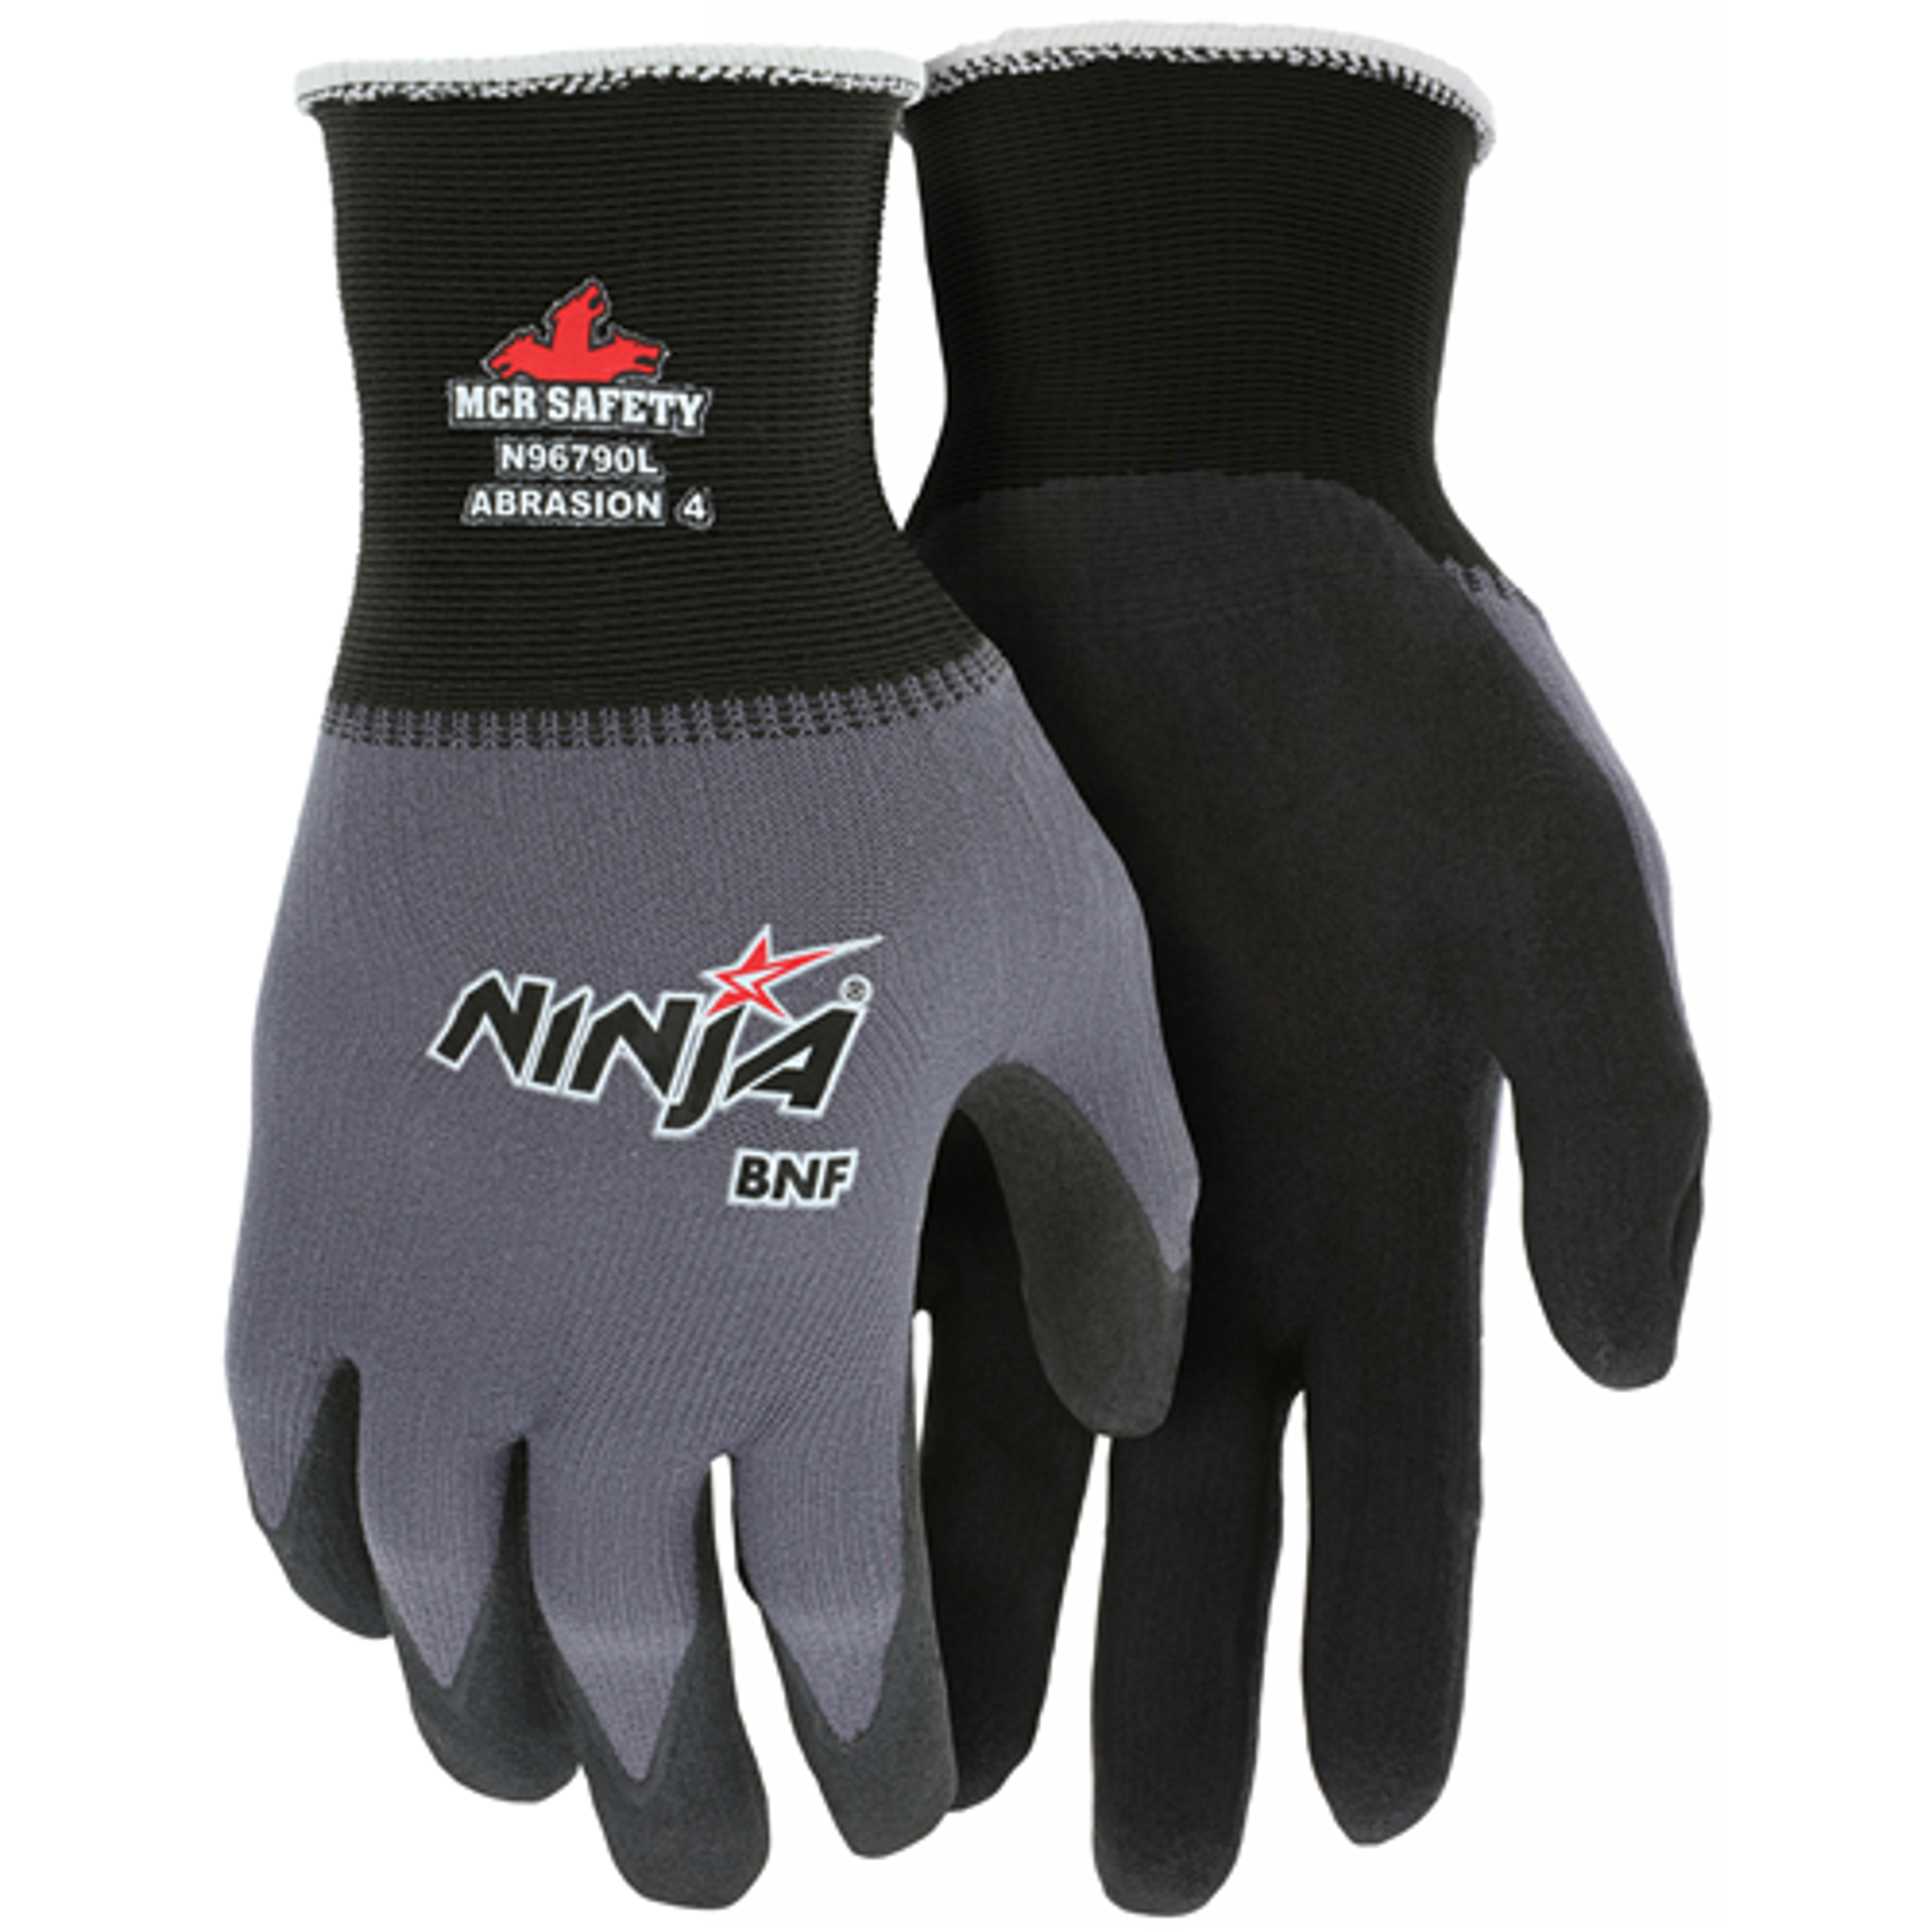 Ninja Bnf, 15 G-palm Coat